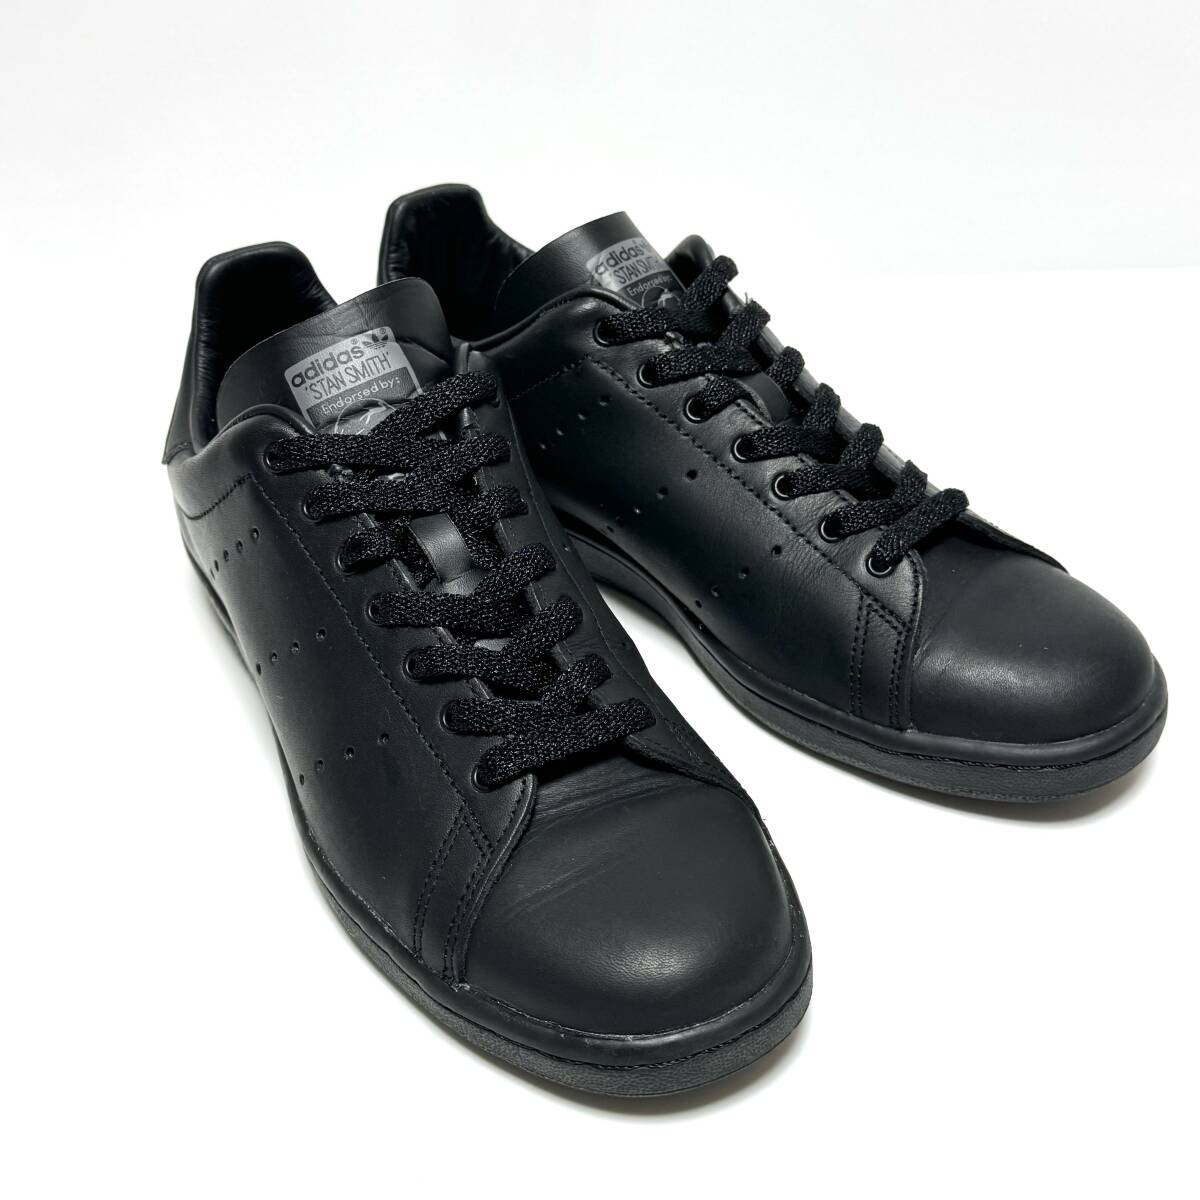  beautiful goods adidas Originals Adidas Originals Stansmith 80S STAN SMITH 80S 26.5 core black core black gray Schic s8 1/2